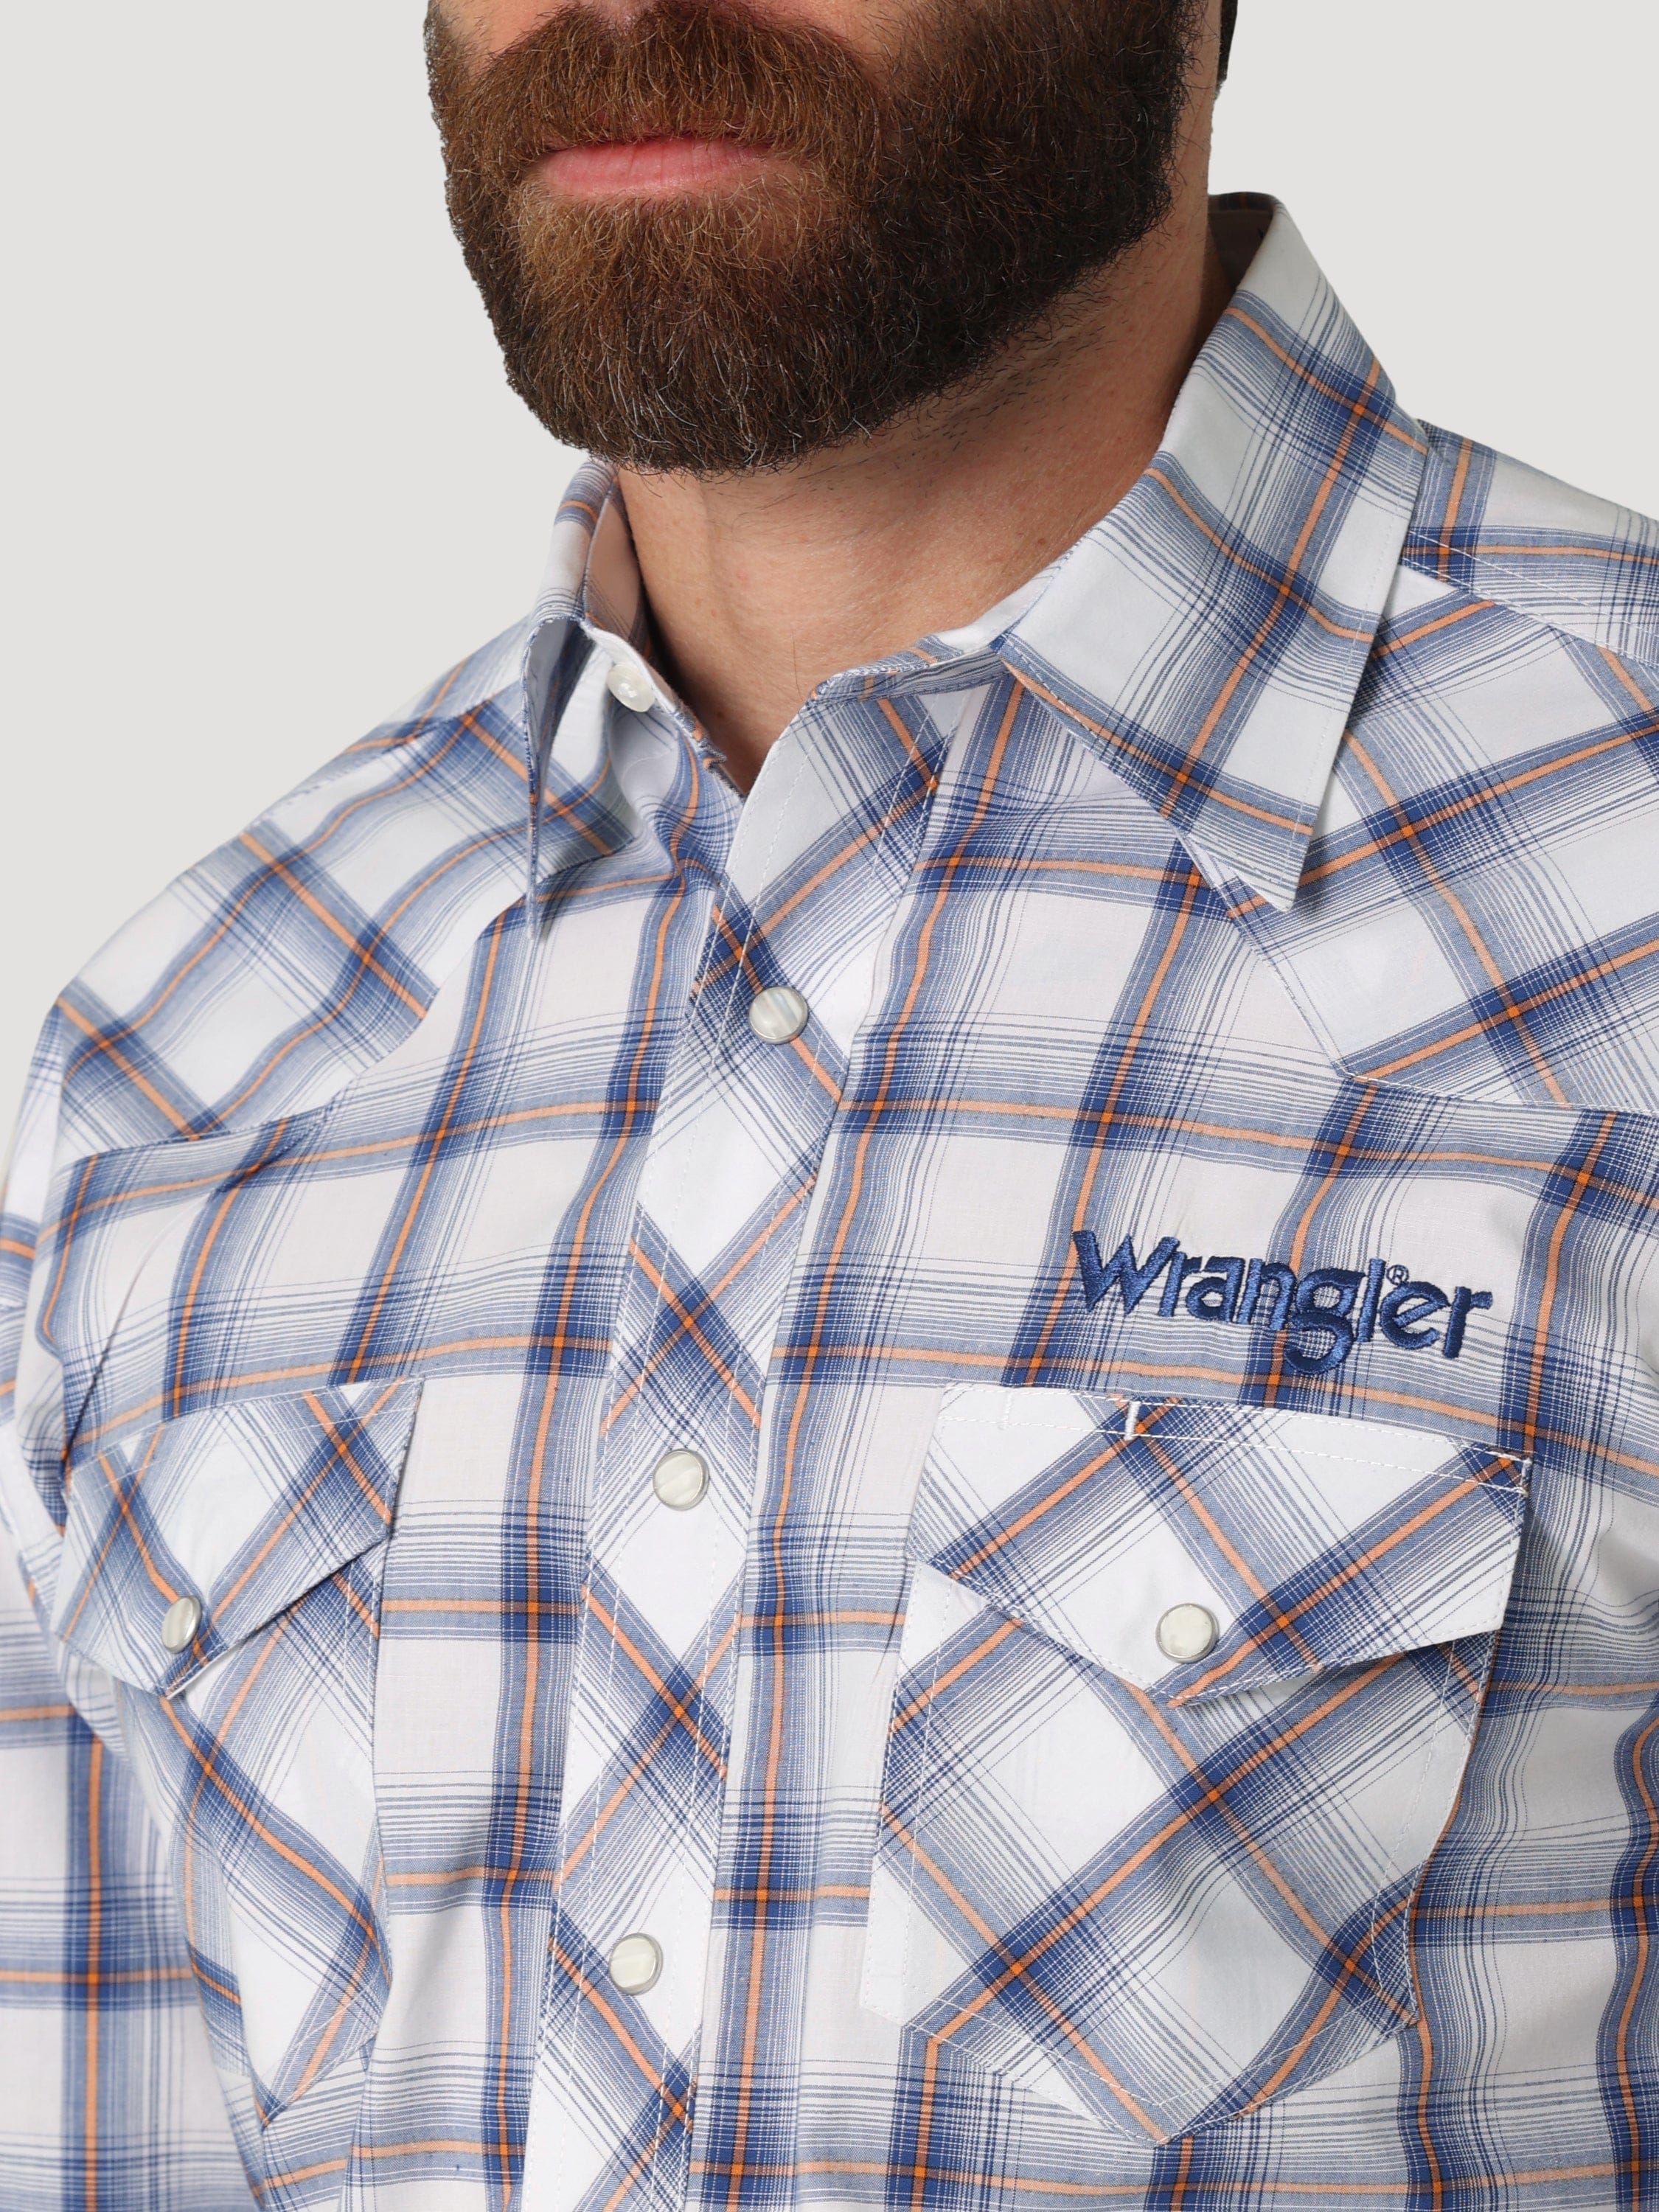 Wrangler Men's George Strait Plaid Button Down Long Sleeve Shirt 11231 -  Russell's Western Wear, Inc.